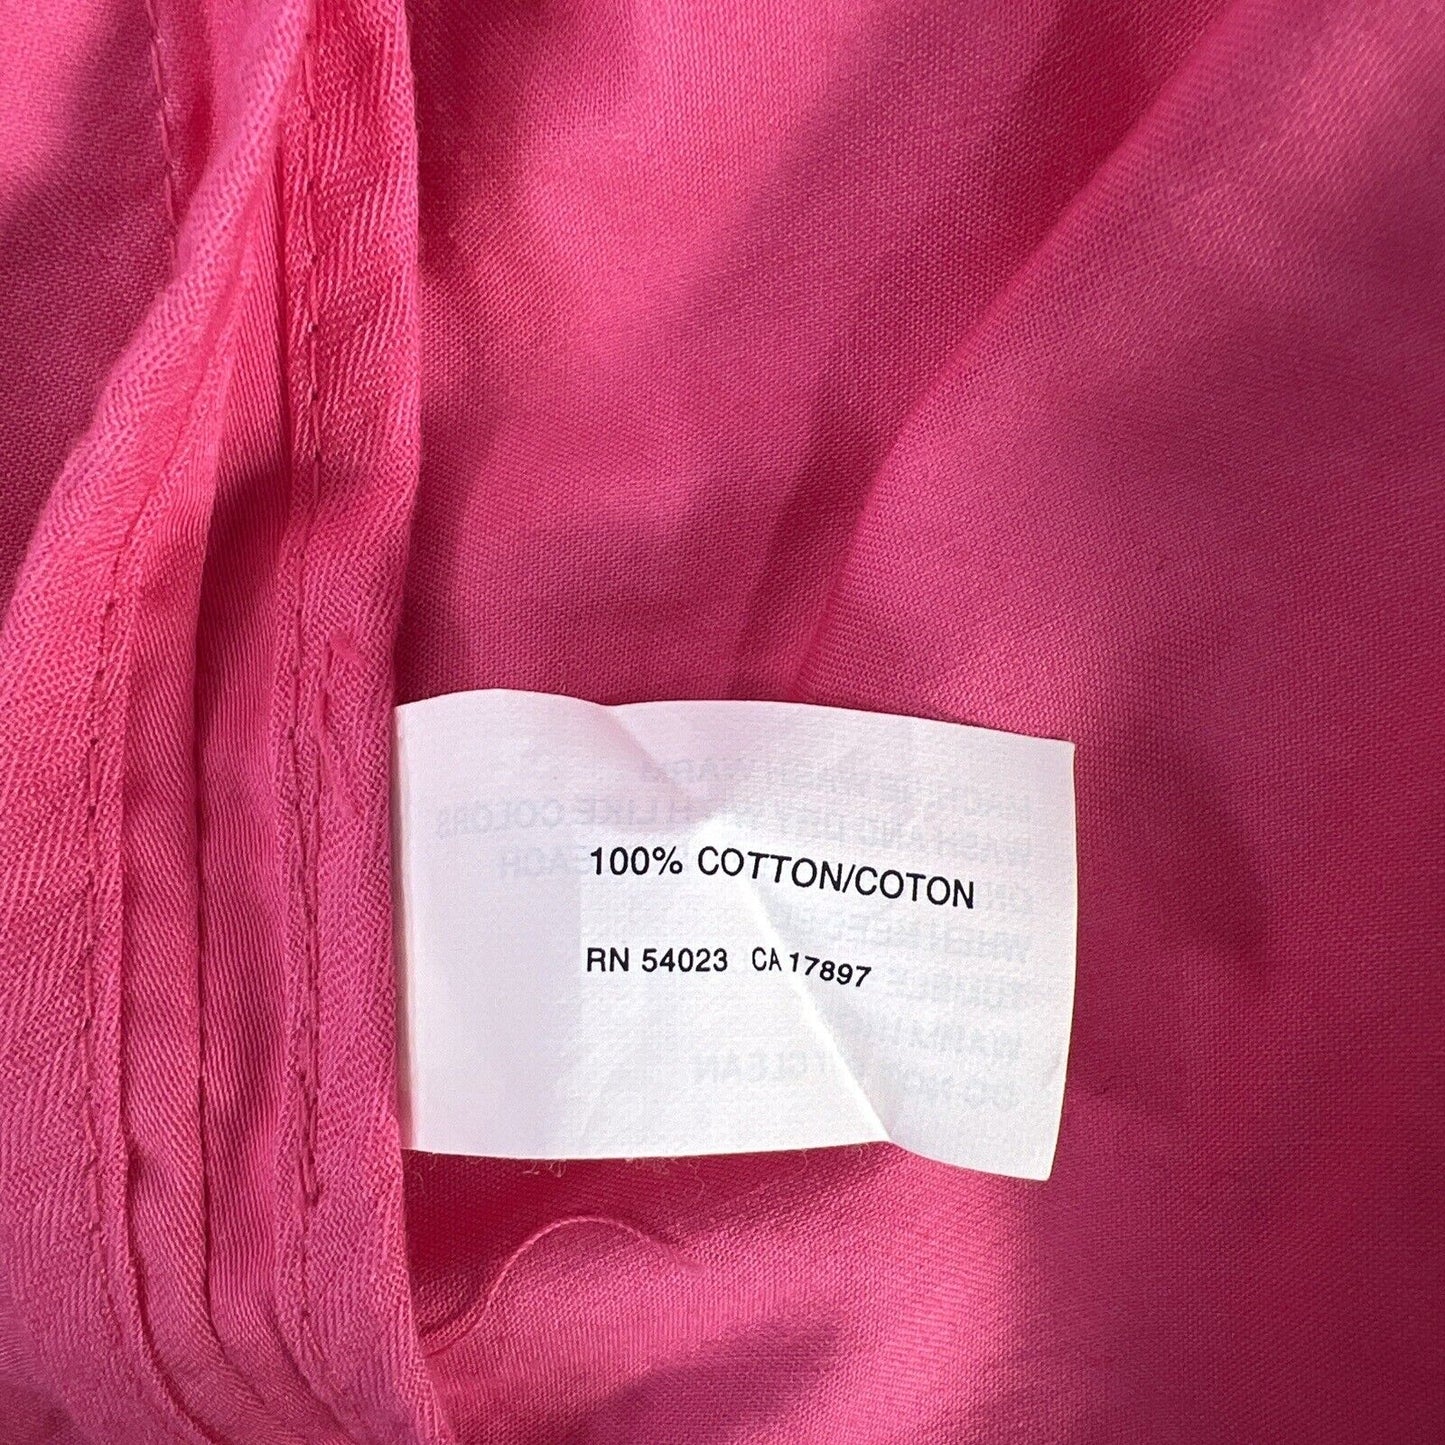 NEW Gap Women's Pink Long Sleeve Trench Coat - M